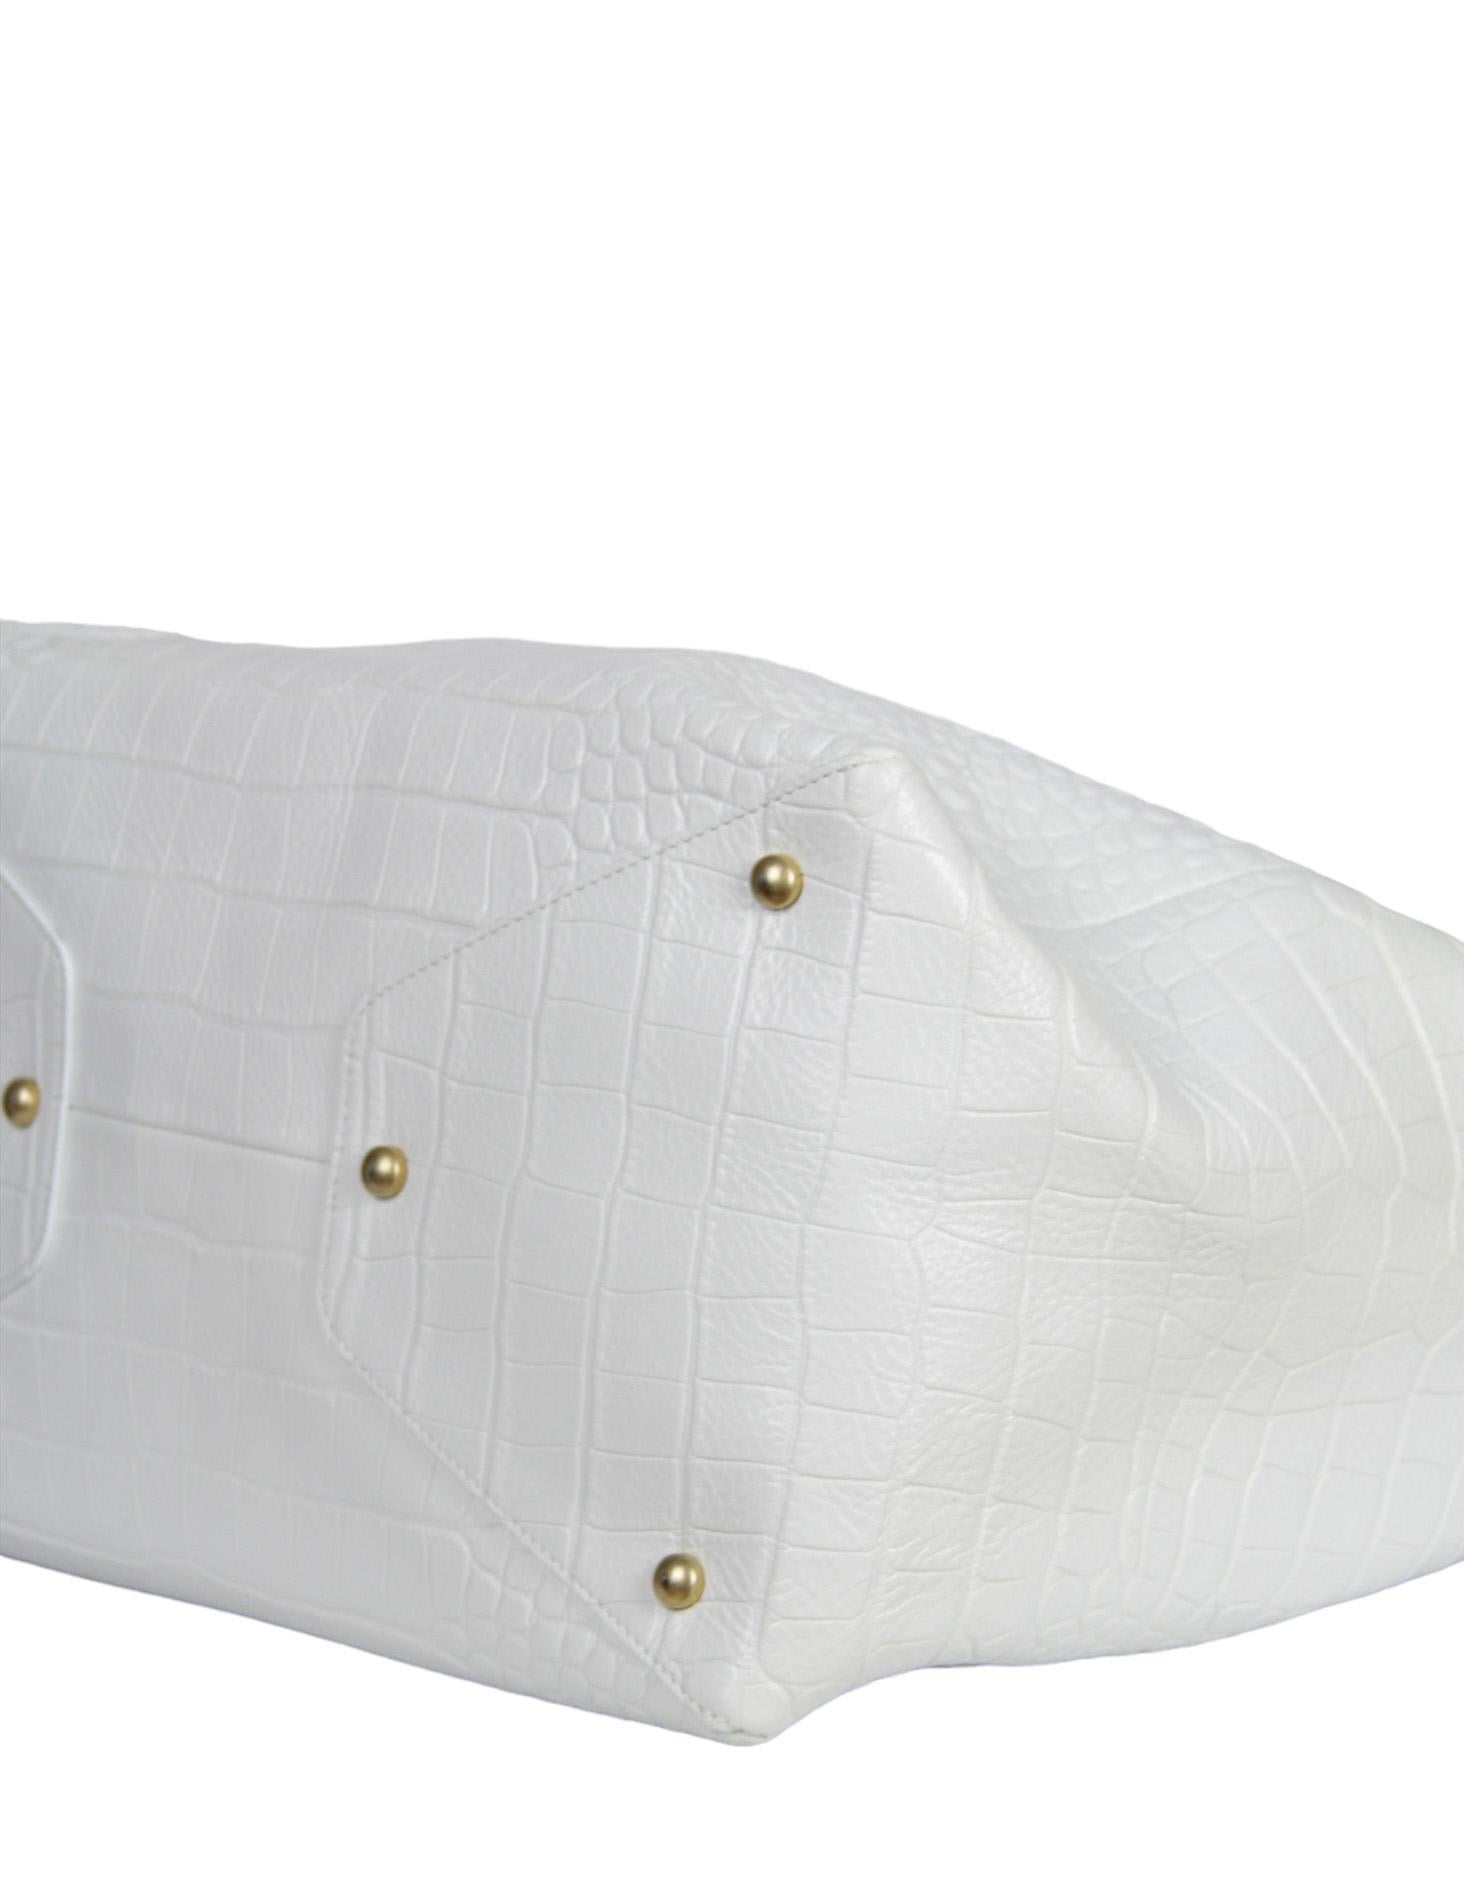 Chanel White Embossed Crocodile Paris-New York Large Coco Tote Bag 1